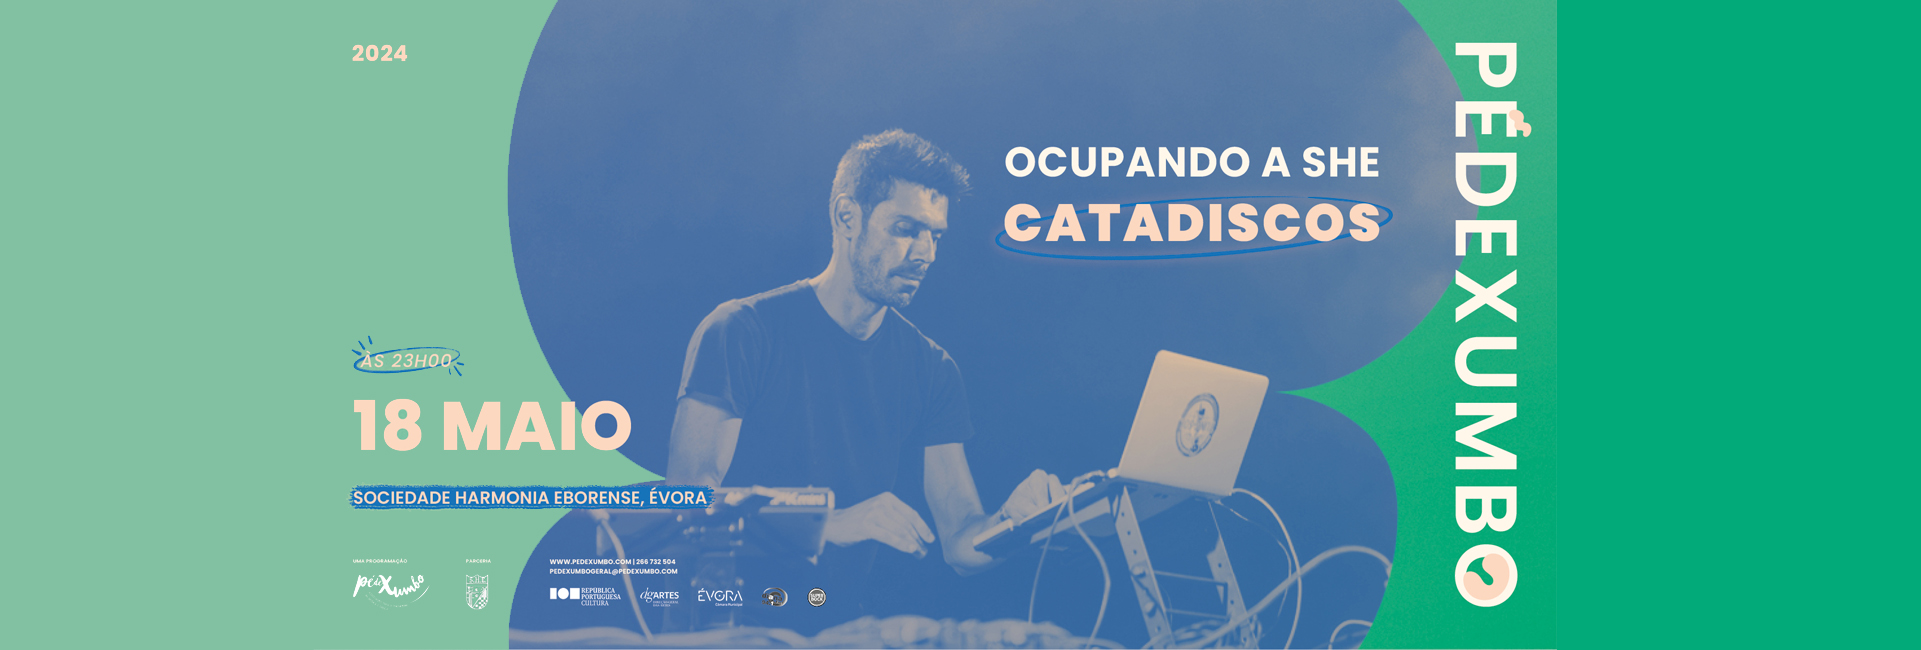 DJ CATADISCOS | PédeXumbo Ocupando a SHE